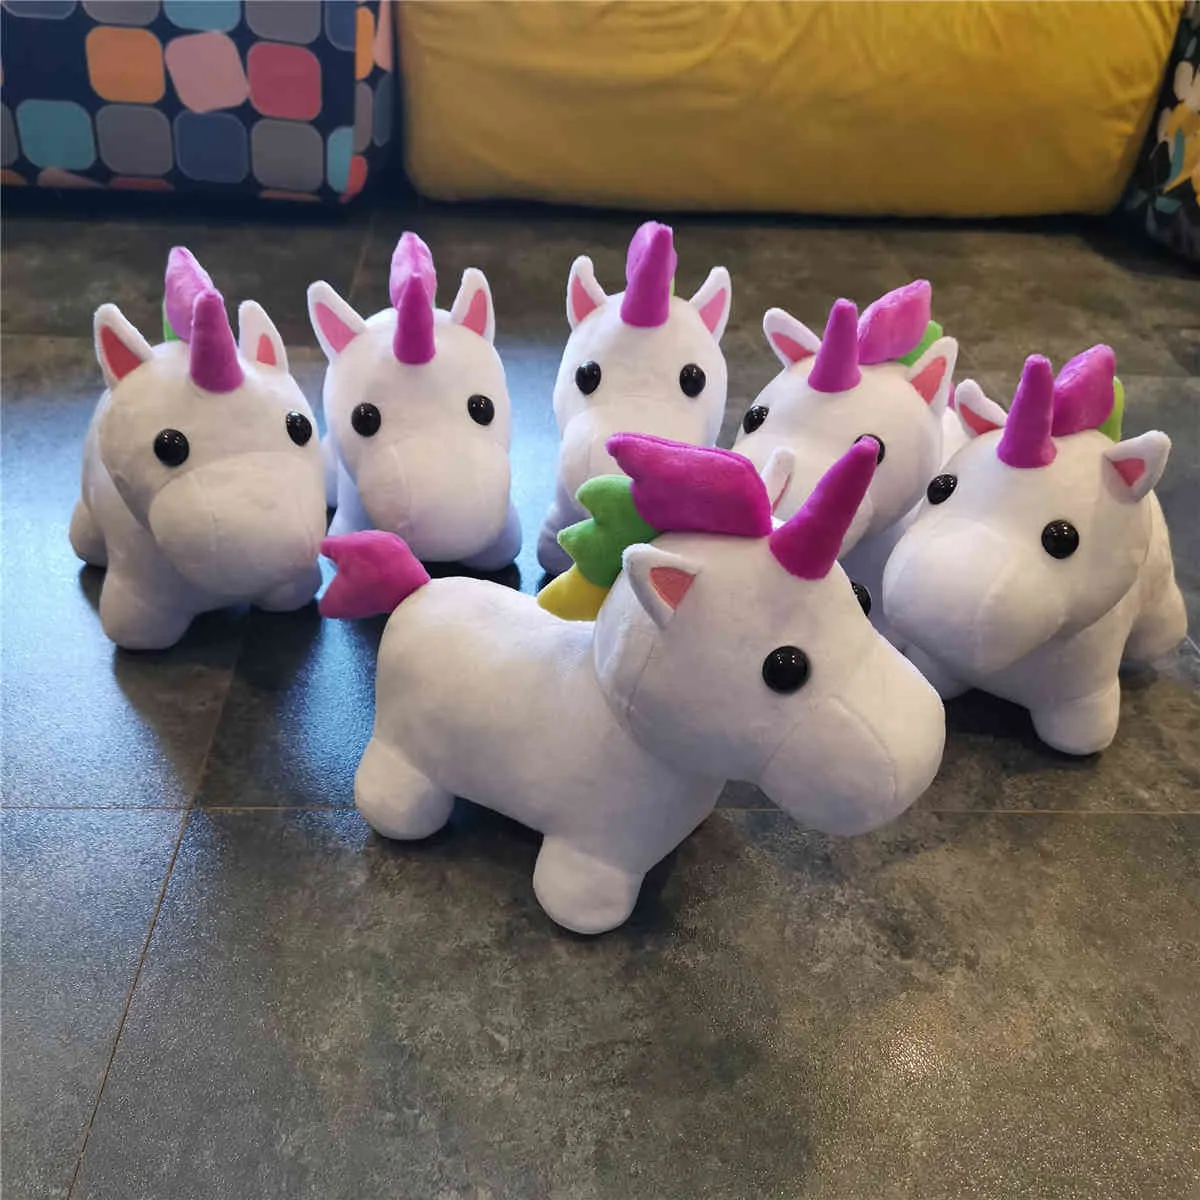 Adopt Me Plush Unicorn Pets Jugetes 10 Inches Game Peluche Piggy